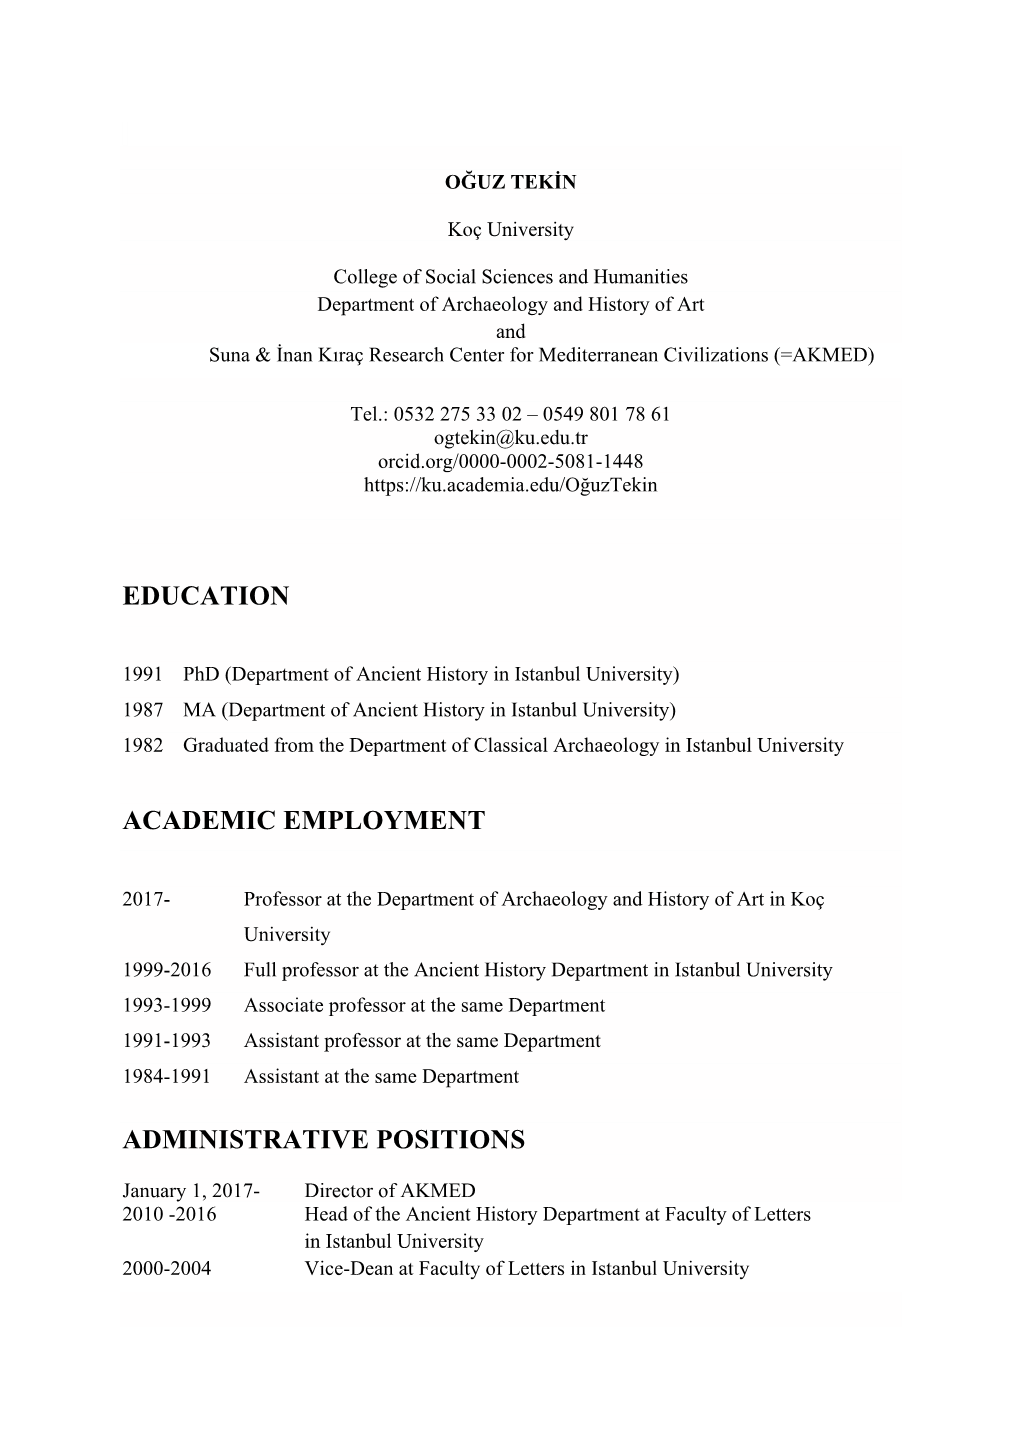 Education Academic Employment Administrative